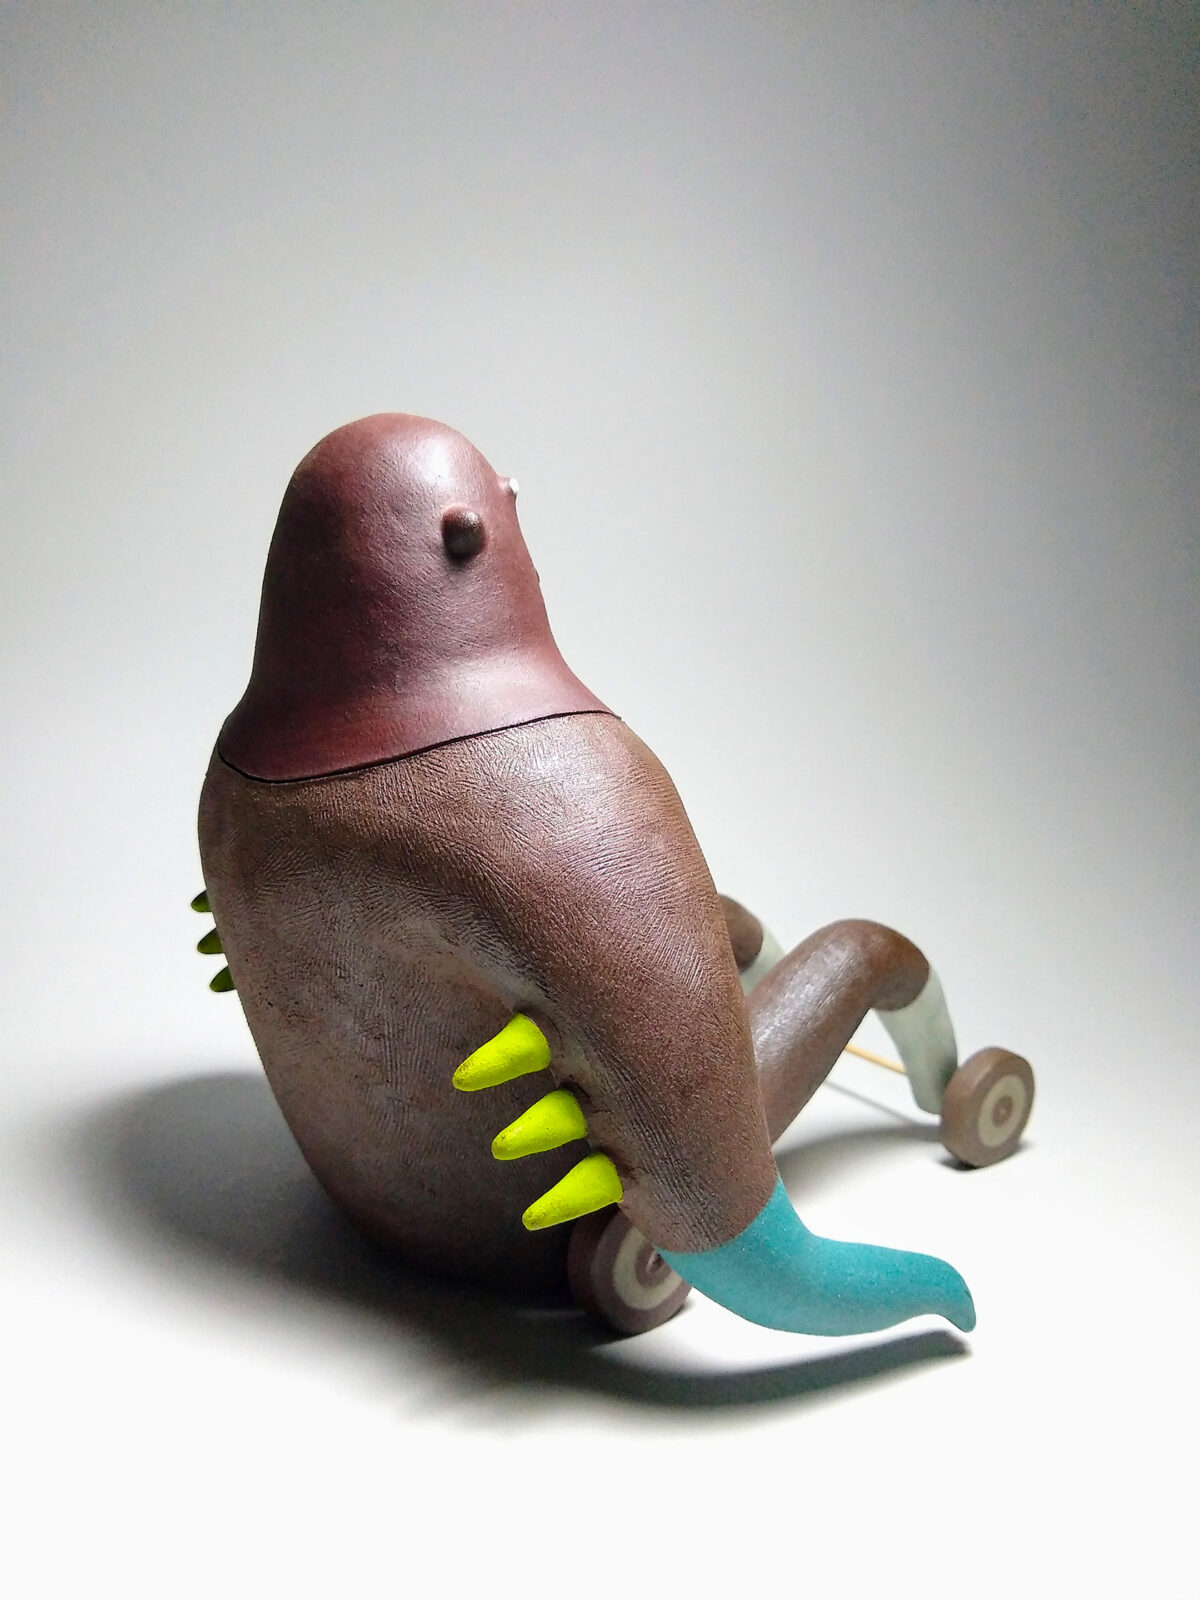 Amusing Ceramic Sculptures Of Quirky Creatures By Luciano Polverigiani (21)